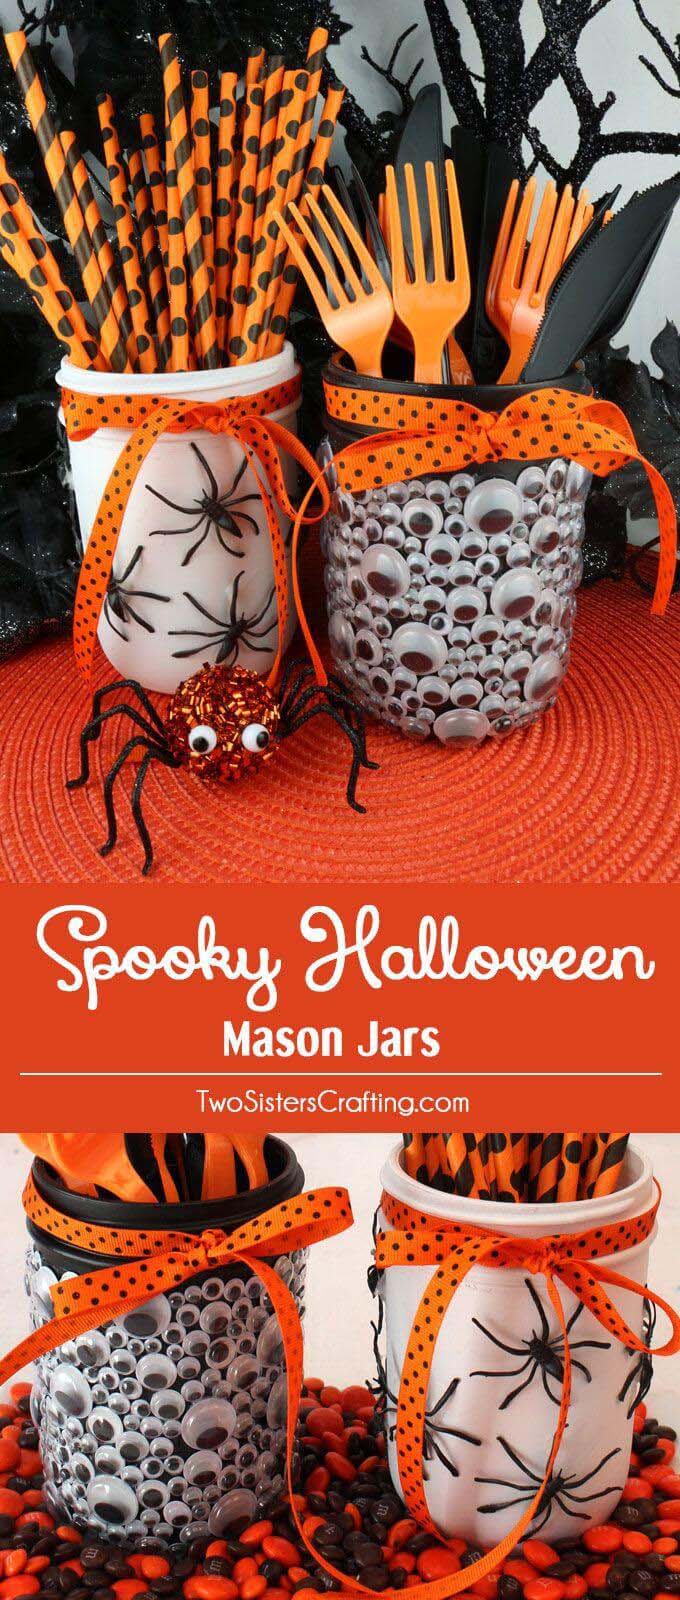 7. Creepy Mason Jar Halloween Crafts Party Decor #halloween #masonjar #crafts #decorhomeideas